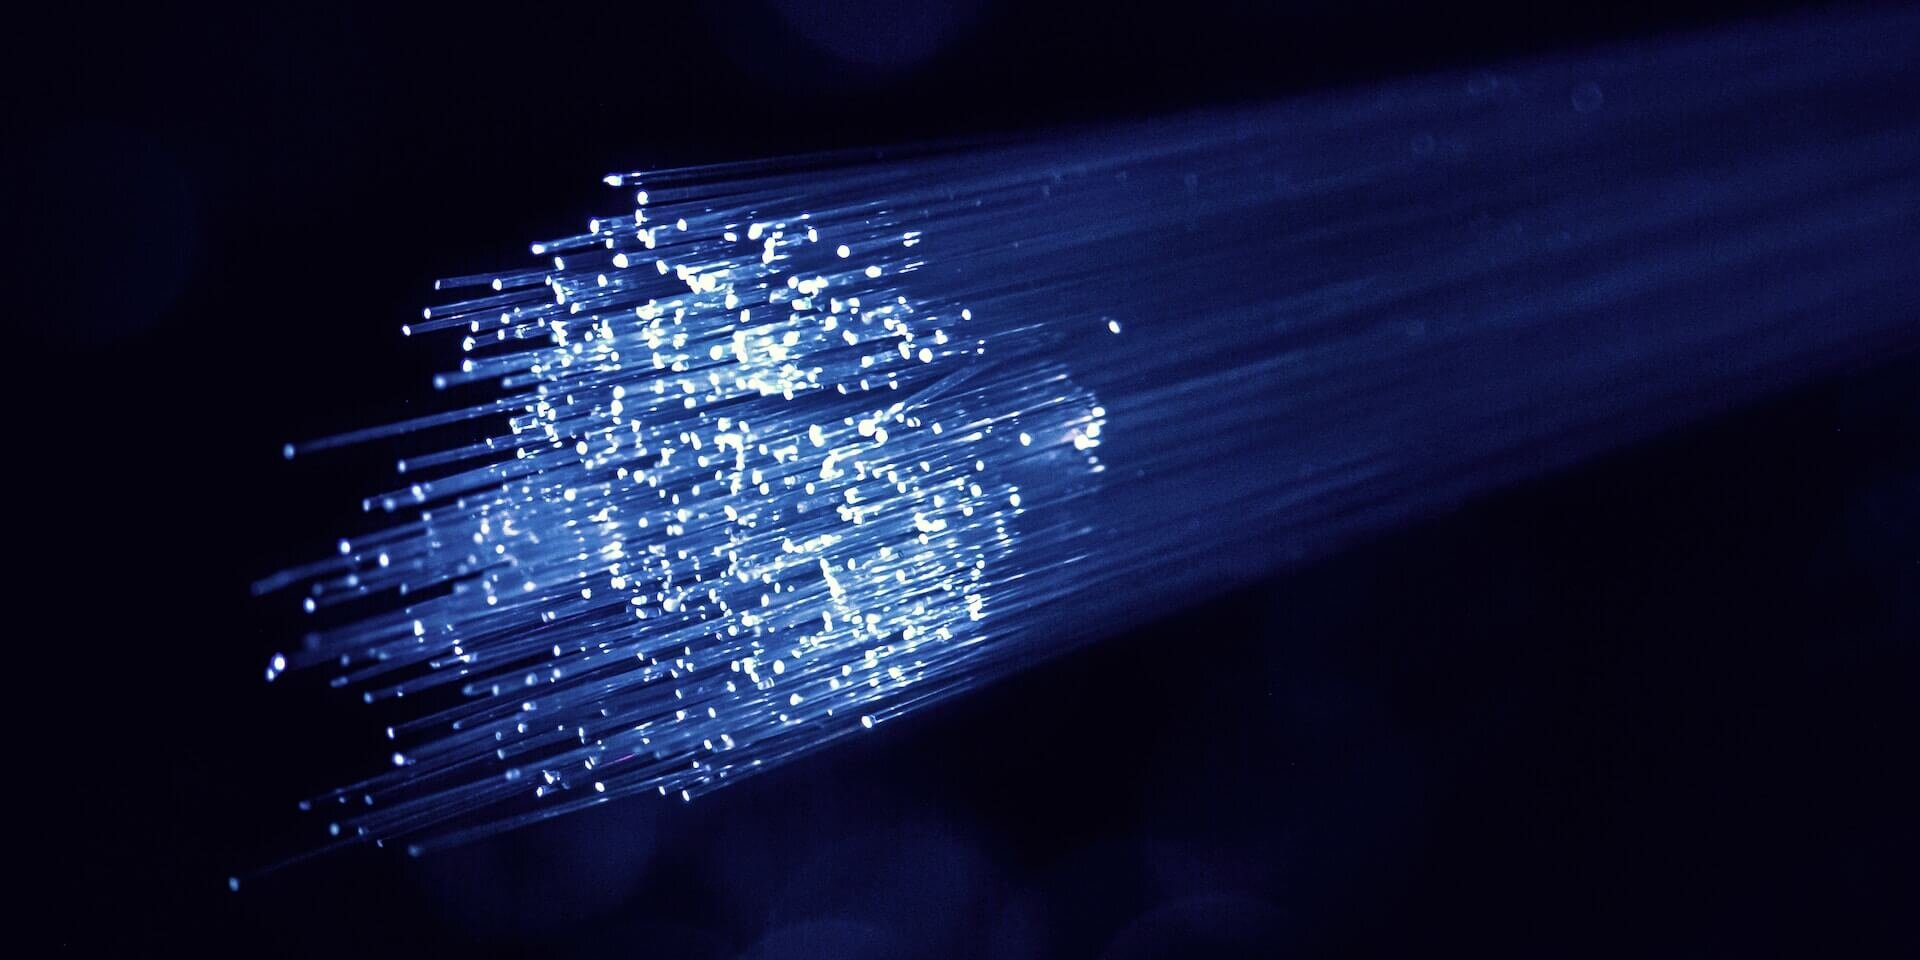 A bundle of optical fibers